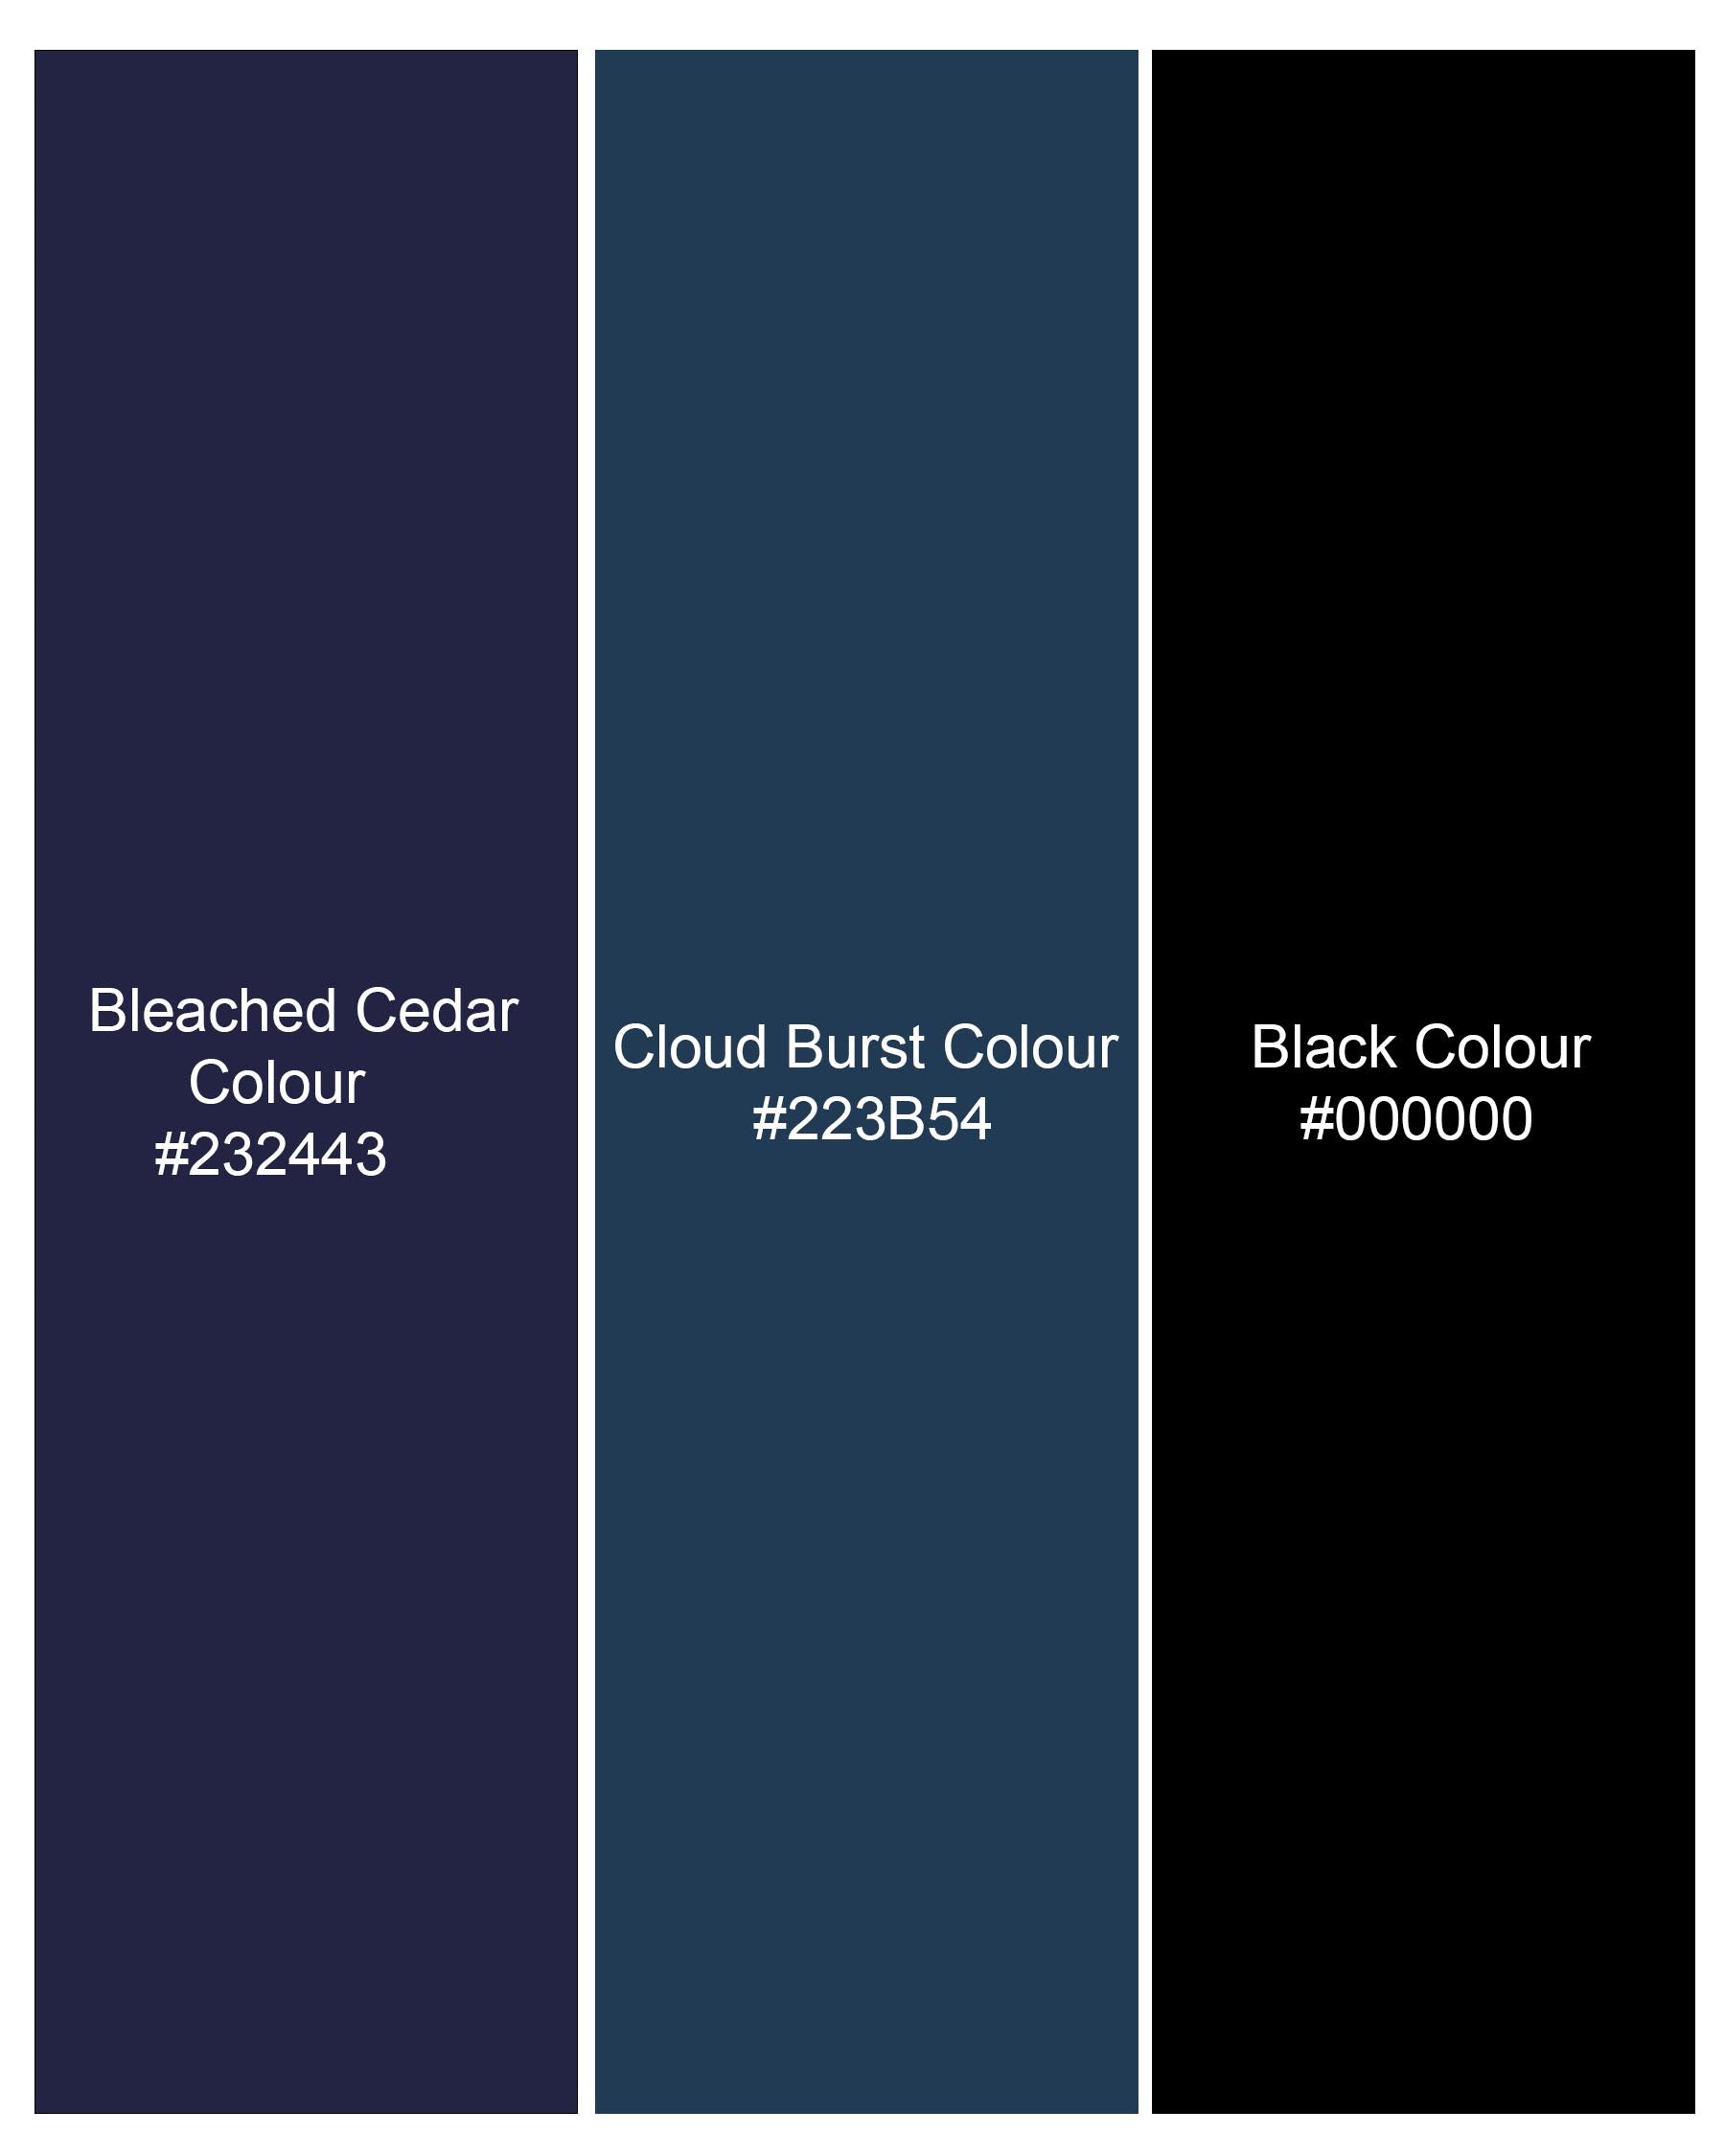 Bleached Blue and Cloud Burst Blue Dobby Textured Premium Giza Cotton Shirt 7801-CA-38,7801-CA-38,7801-CA-39,7801-CA-39,7801-CA-40,7801-CA-40,7801-CA-42,7801-CA-42,7801-CA-44,7801-CA-44,7801-CA-46,7801-CA-46,7801-CA-48,7801-CA-48,7801-CA-50,7801-CA-50,7801-CA-52,7801-CA-52